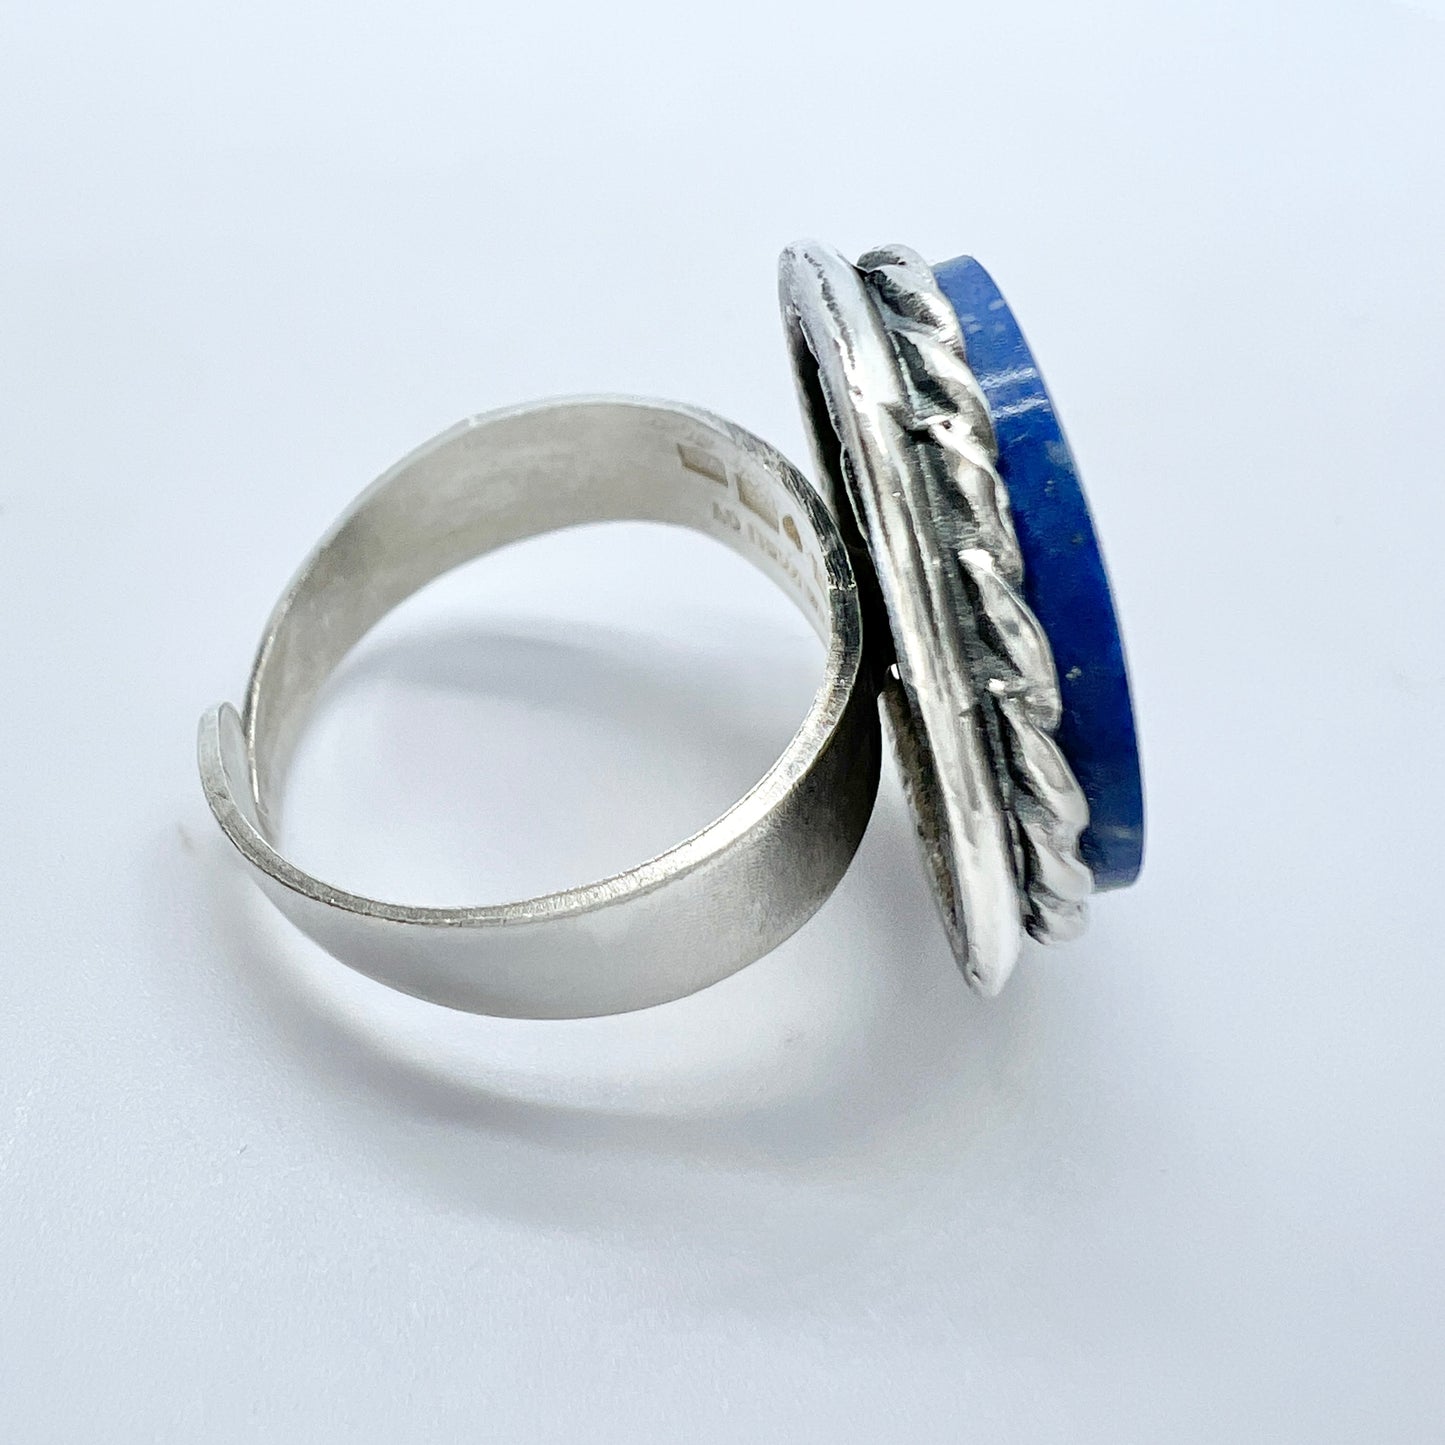 Polar Koru, Finland 1974. Vintage Sterling Silver Lapis Lazuli Ring. Adjustable Size.